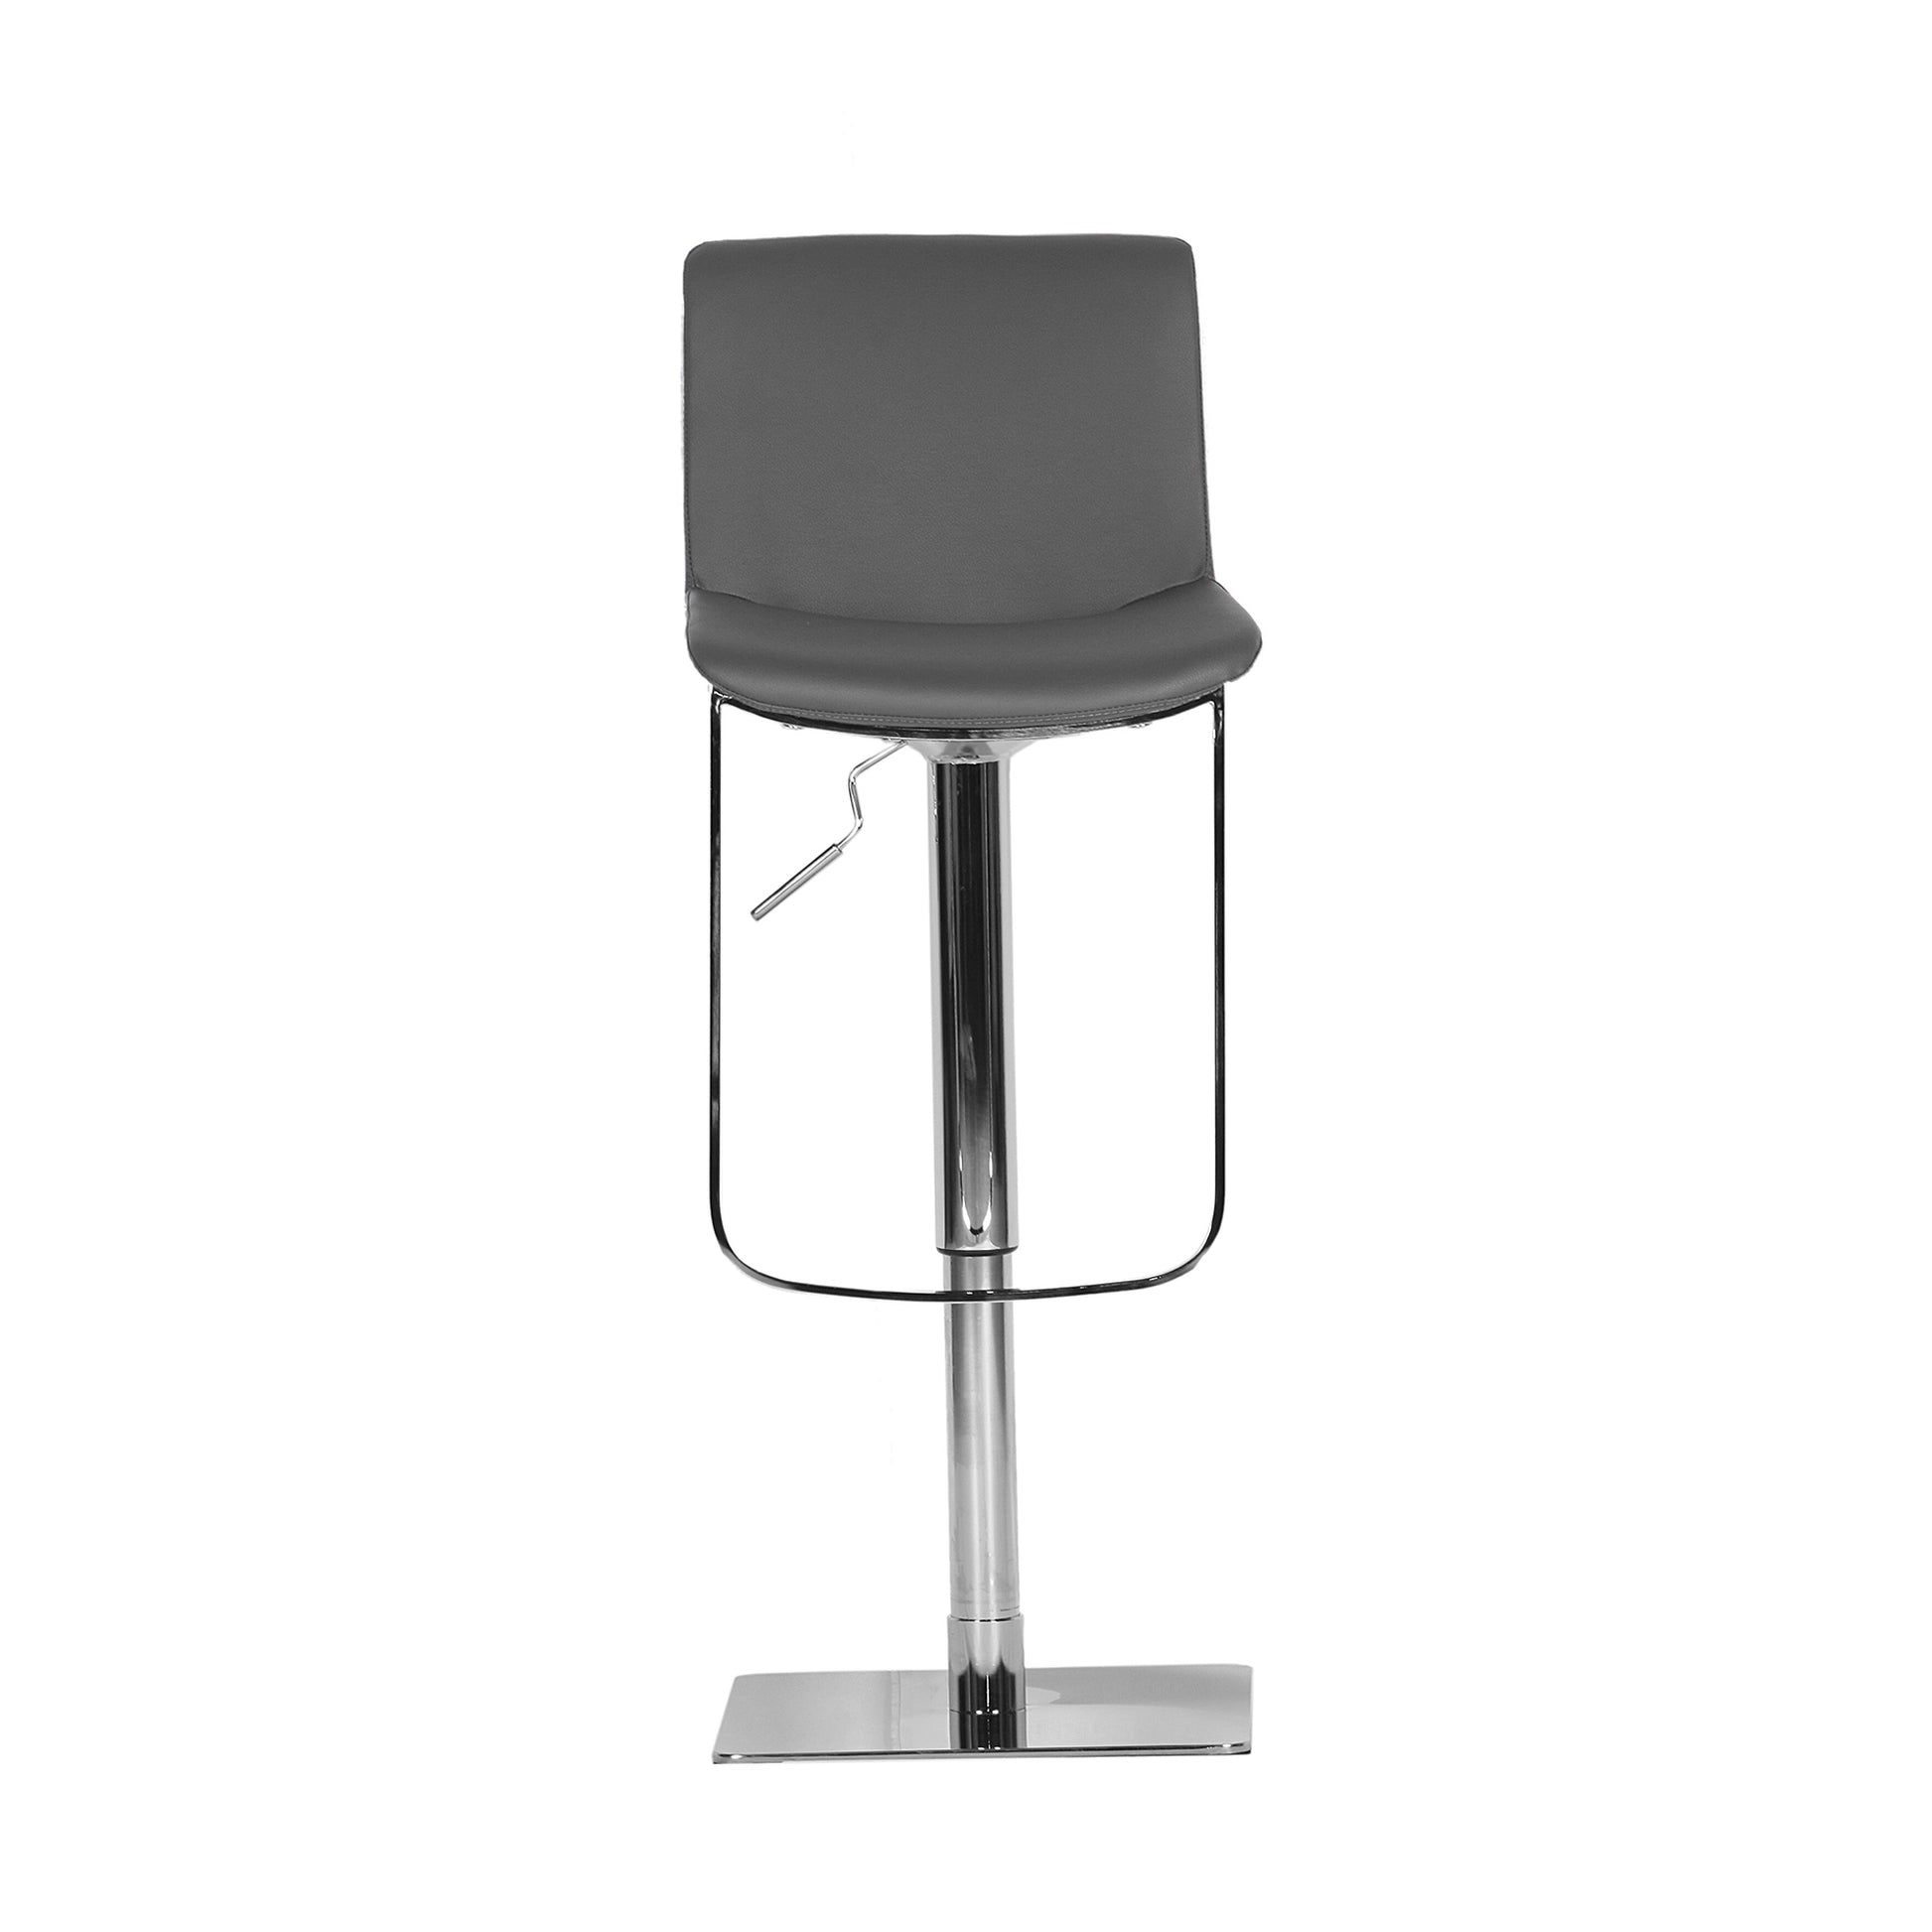 Celeb bar stool gray - Dreamart Gallery